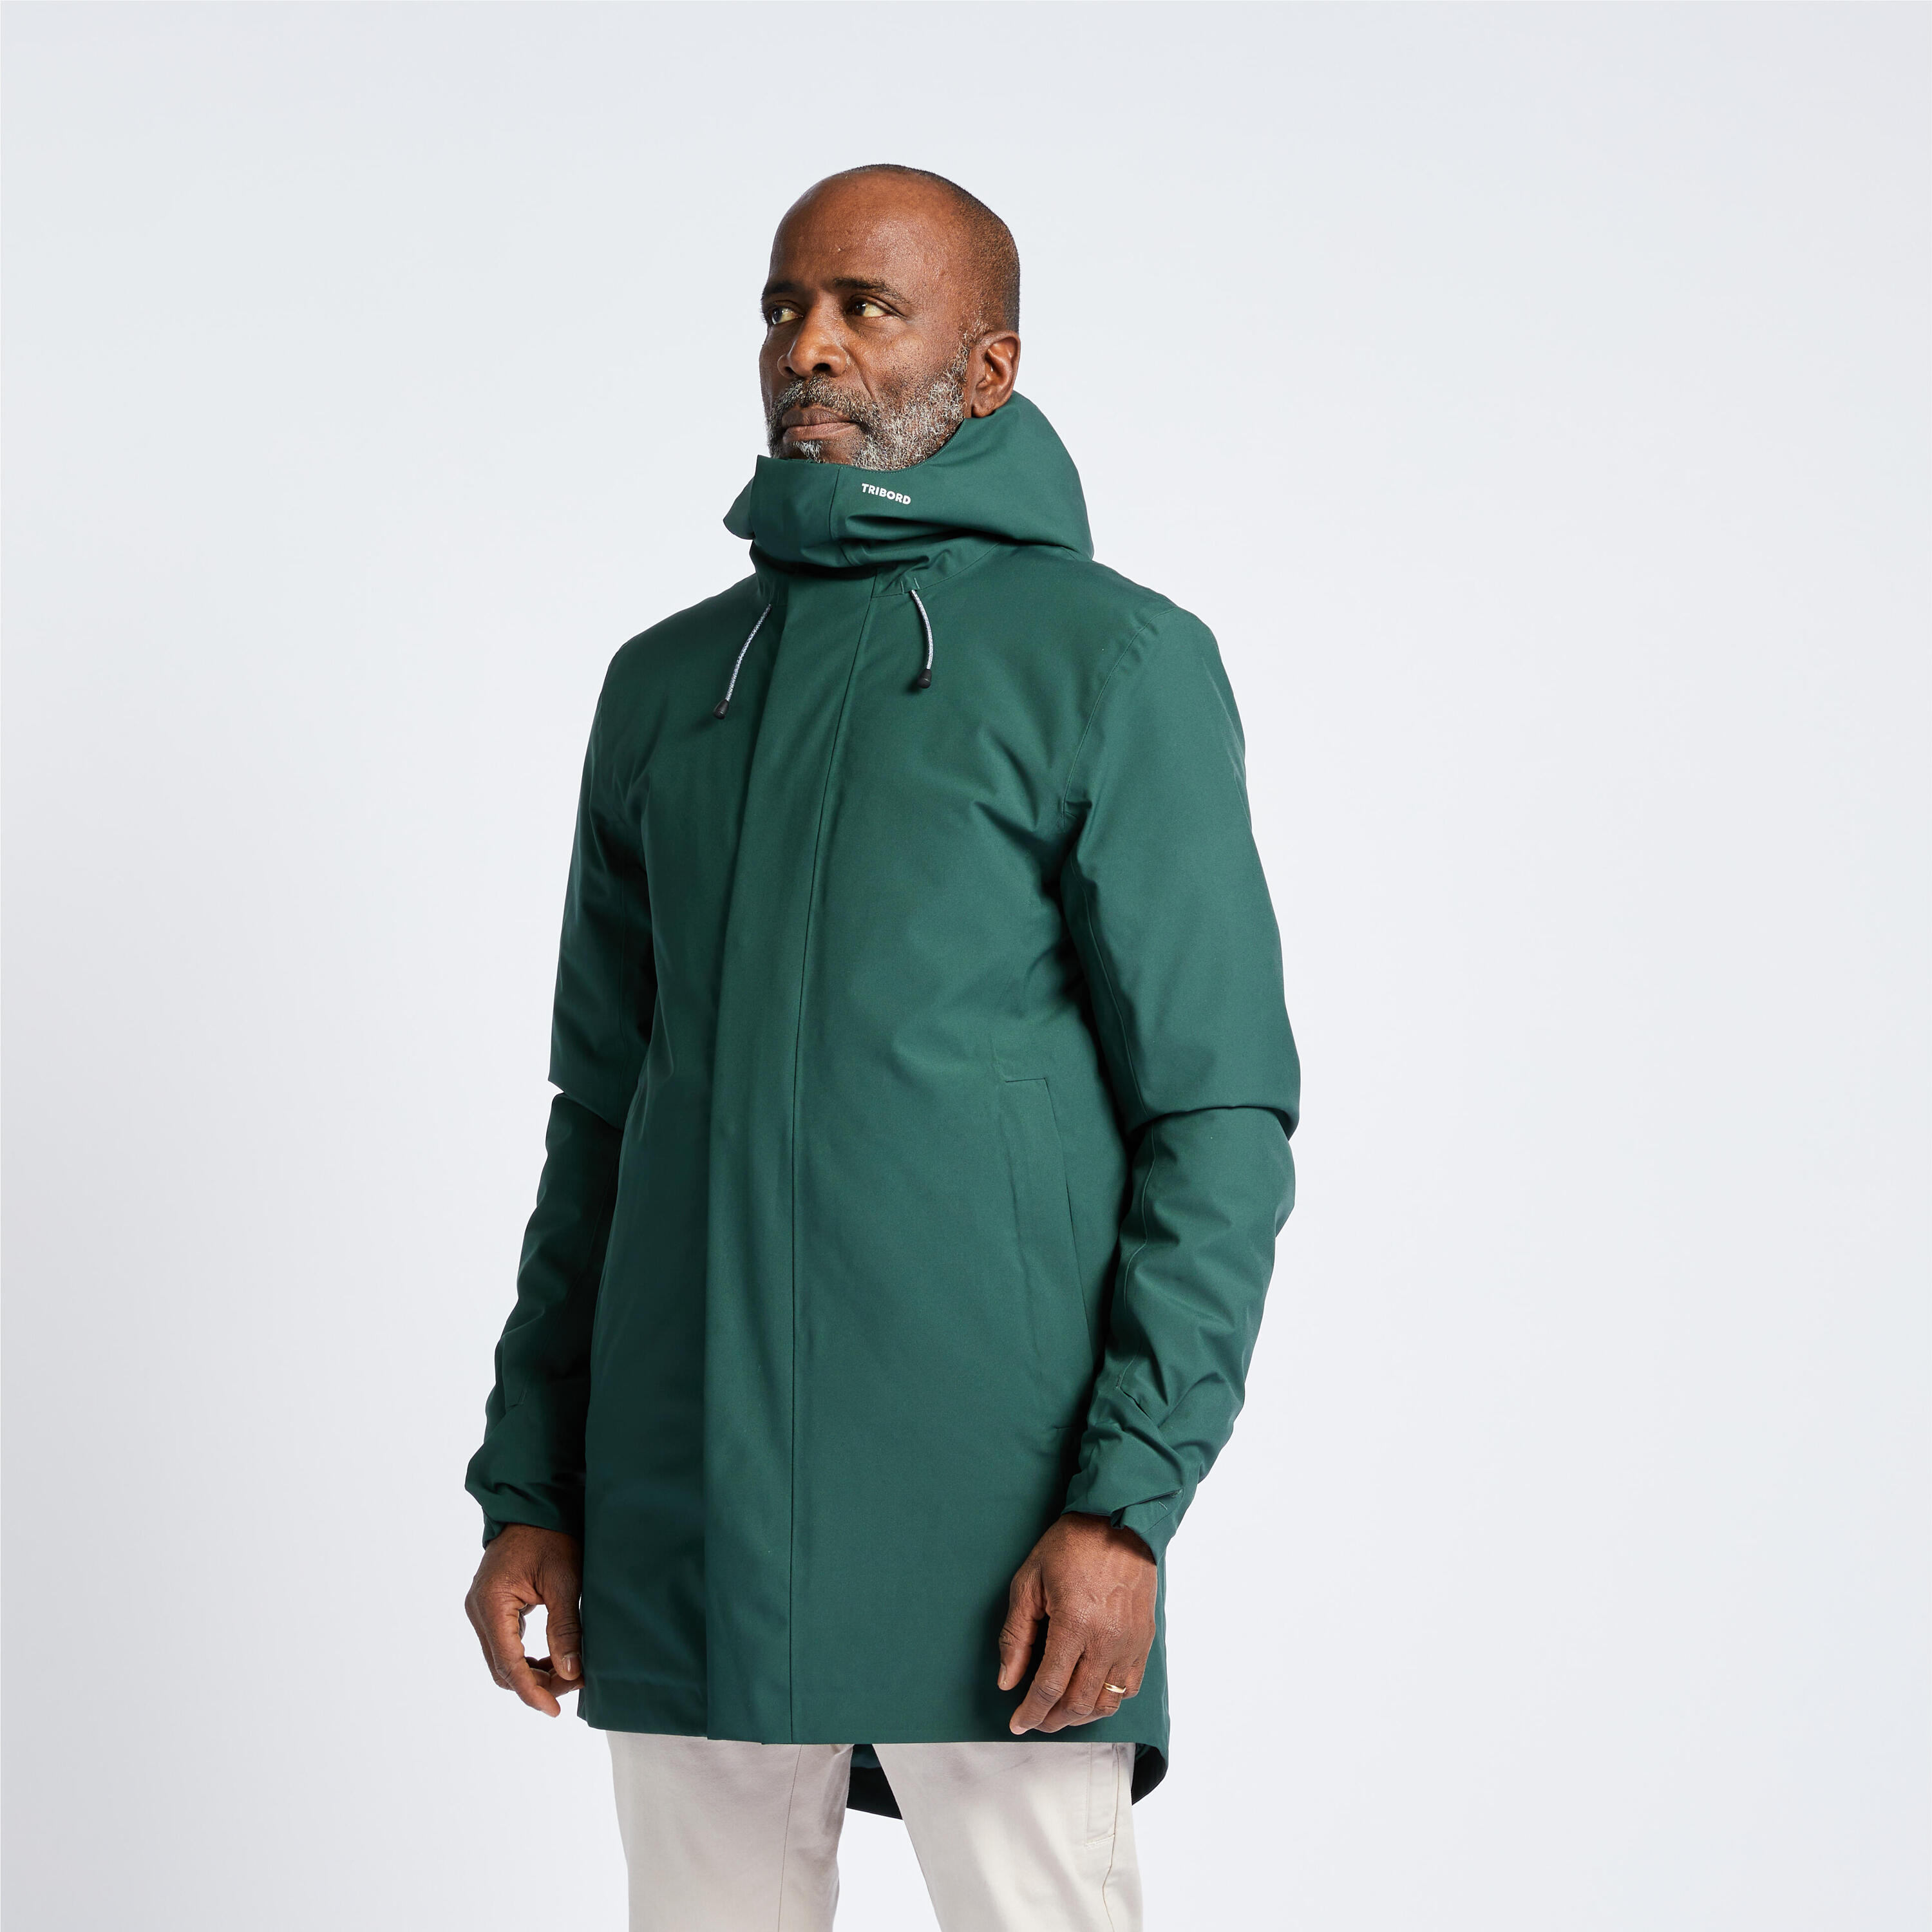 Men's warm waterproof windproof sailing jacket - SAILING 300 green 1/9